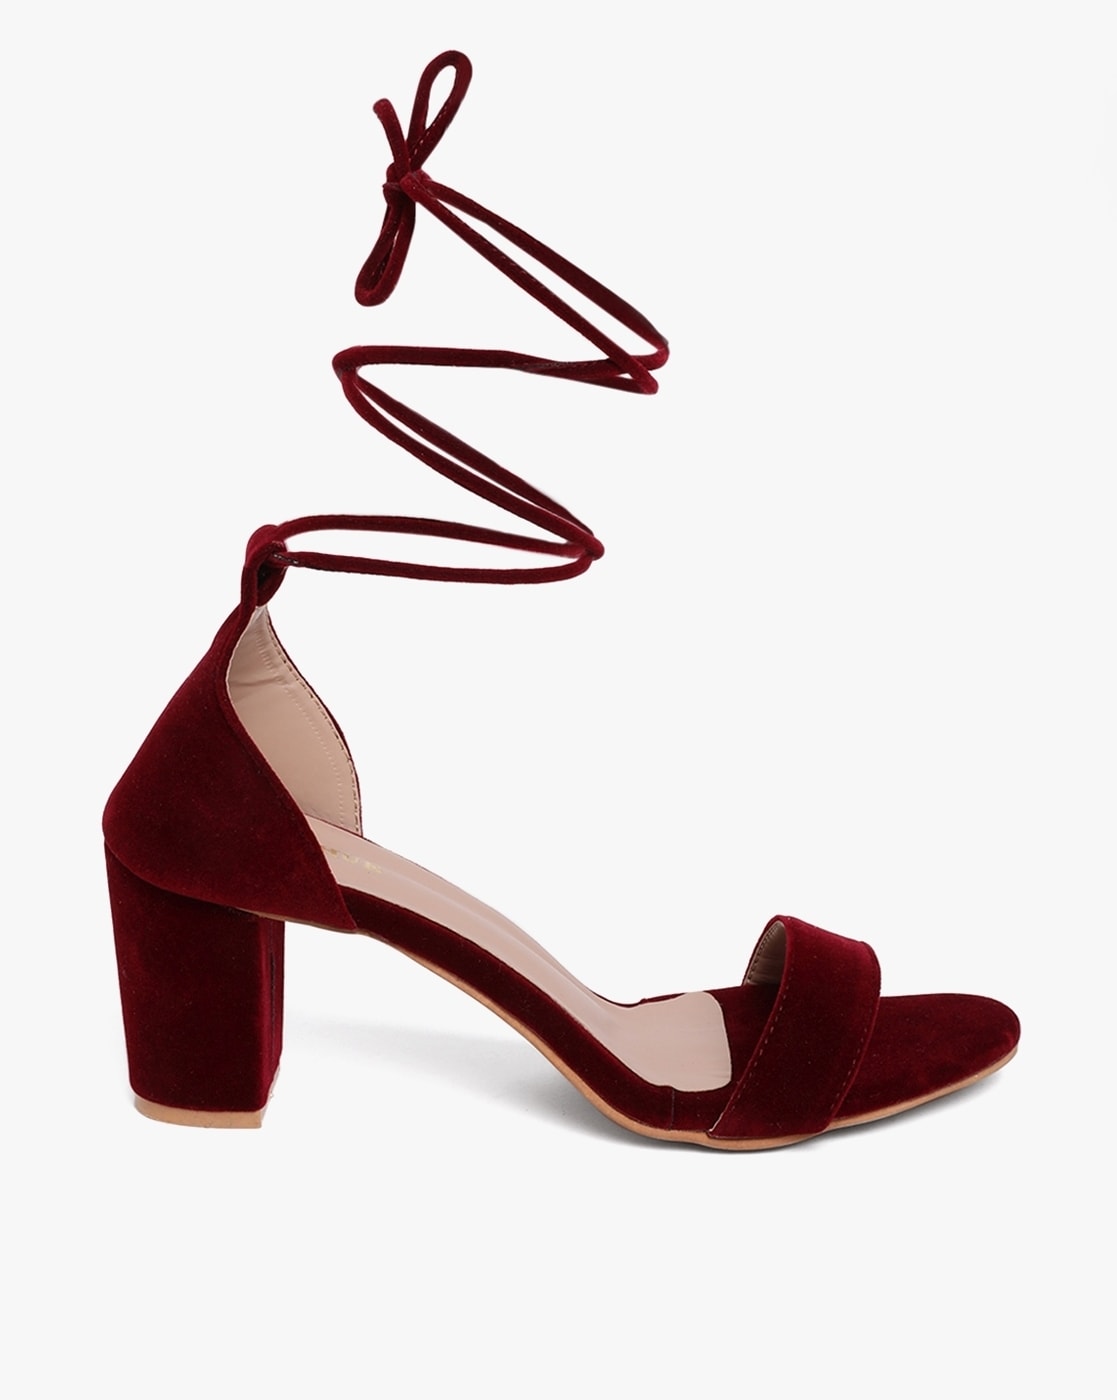 Franco Sarto Red Block Heels for Women | eBay